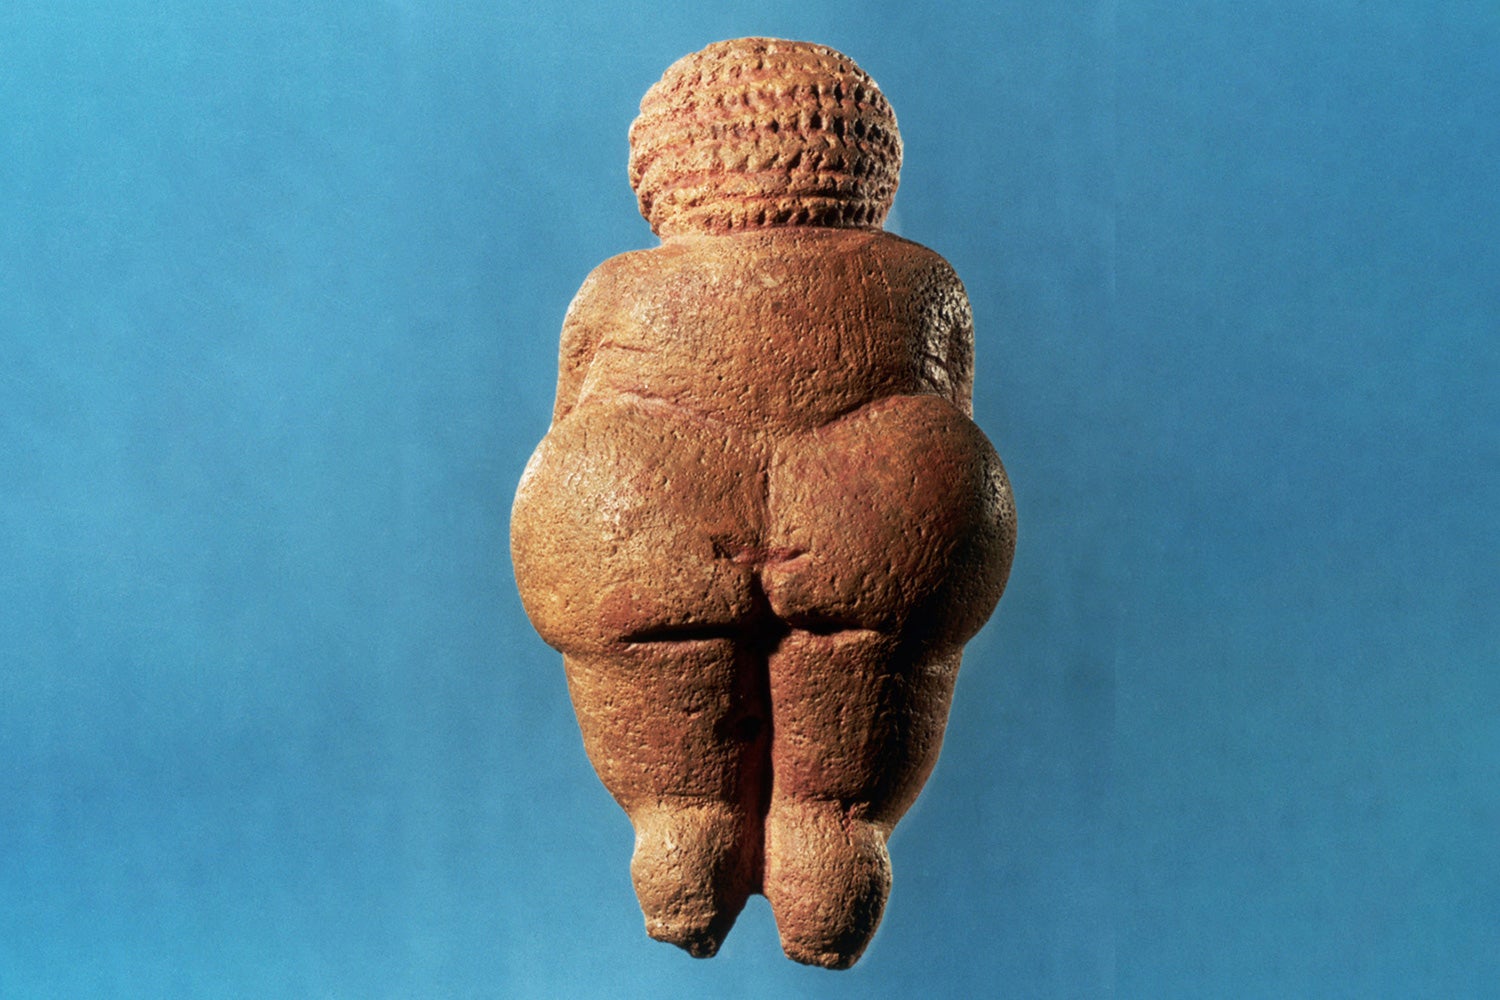 Backside of Benus of Willendorf statue on light blue